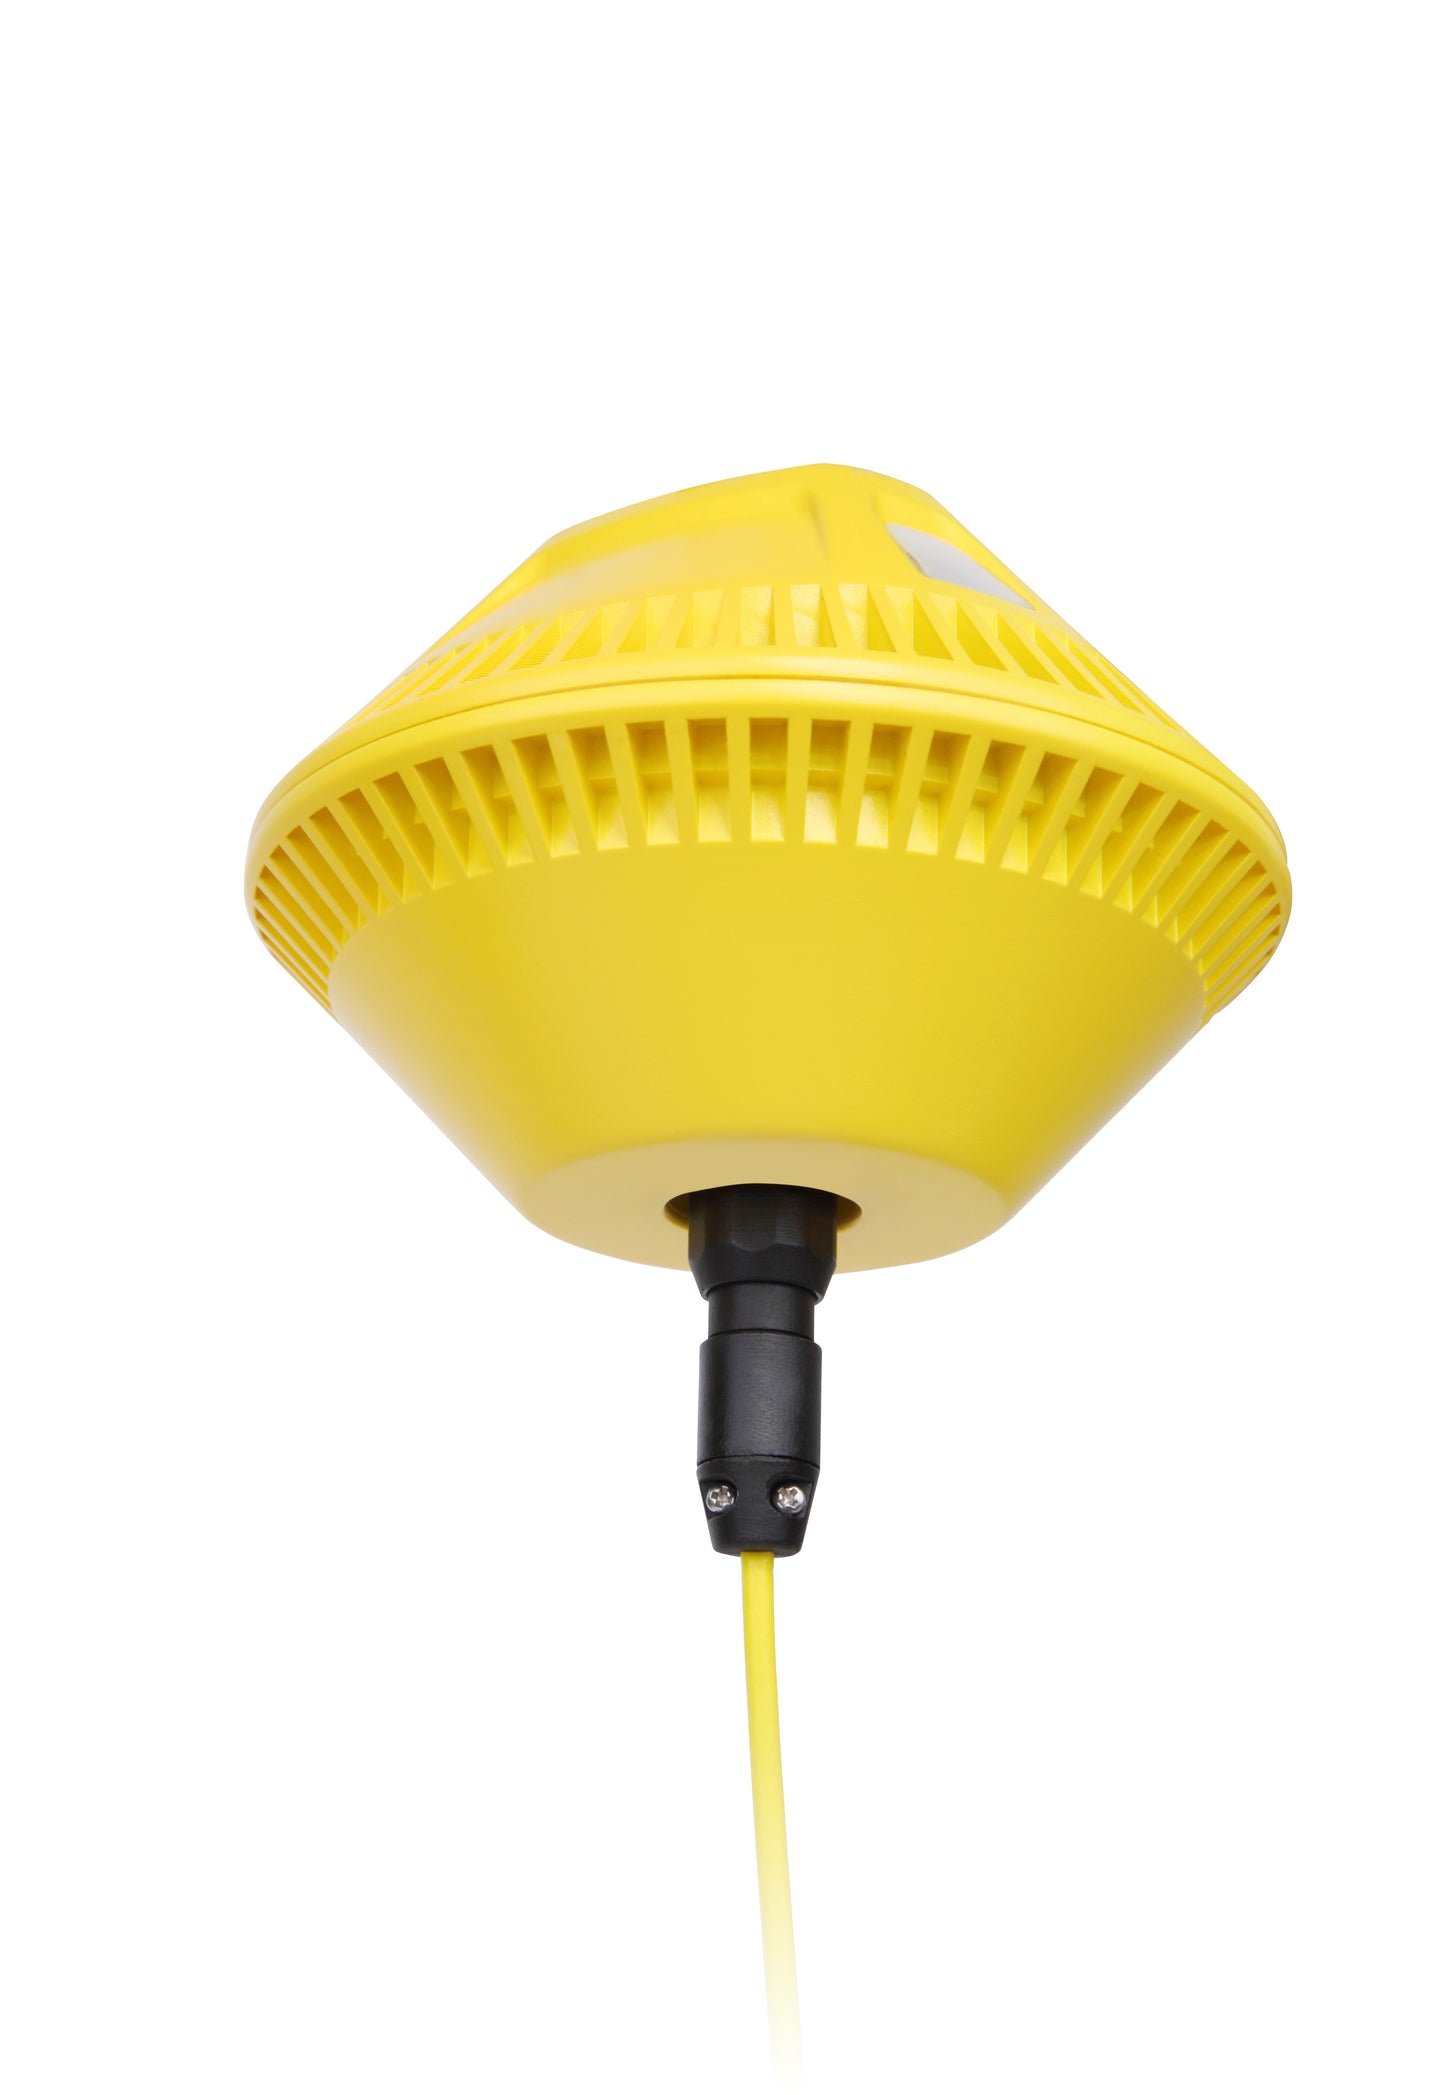 CHASING DORY - Víz alatti kamerás drón alapcsomag